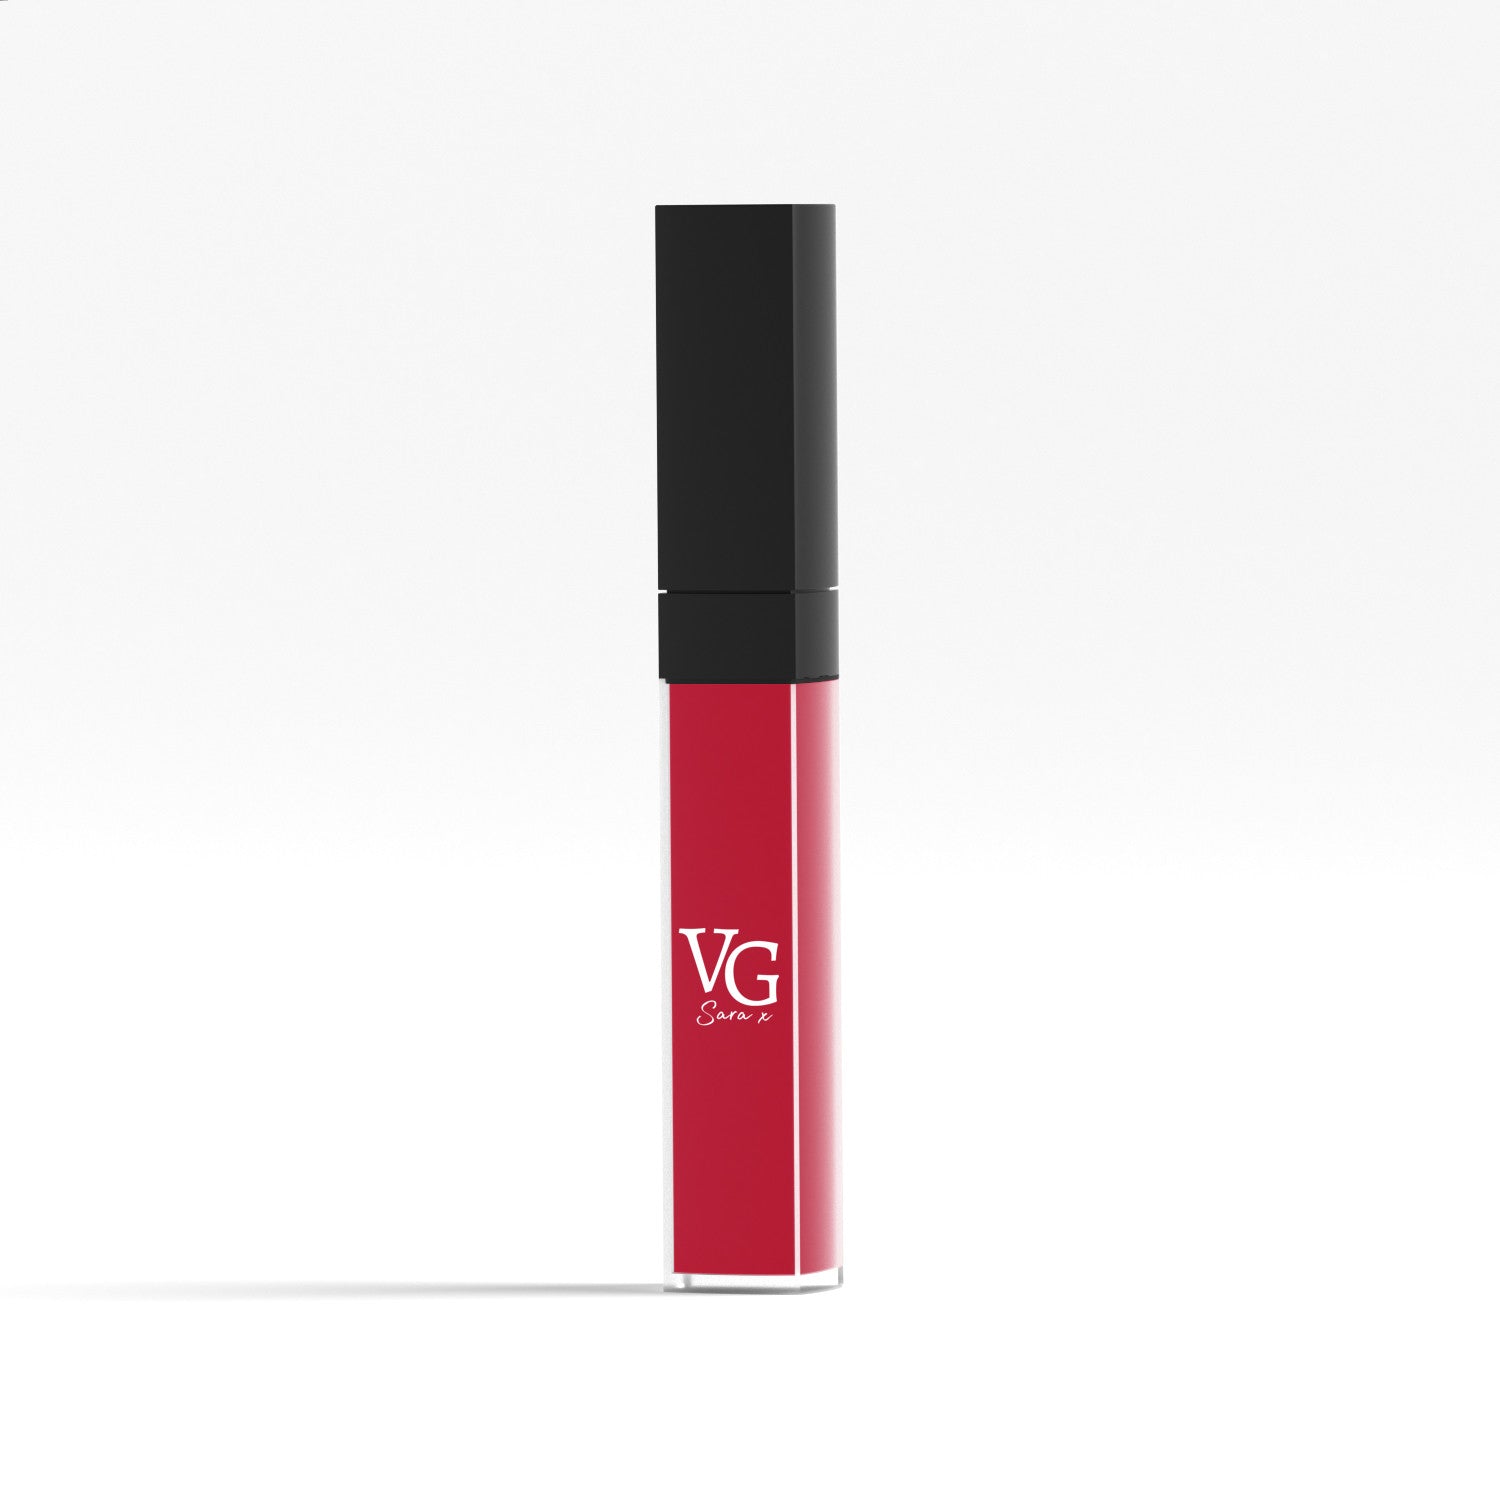 A loving red variation color shade of liquid lipstick Vg Sara x